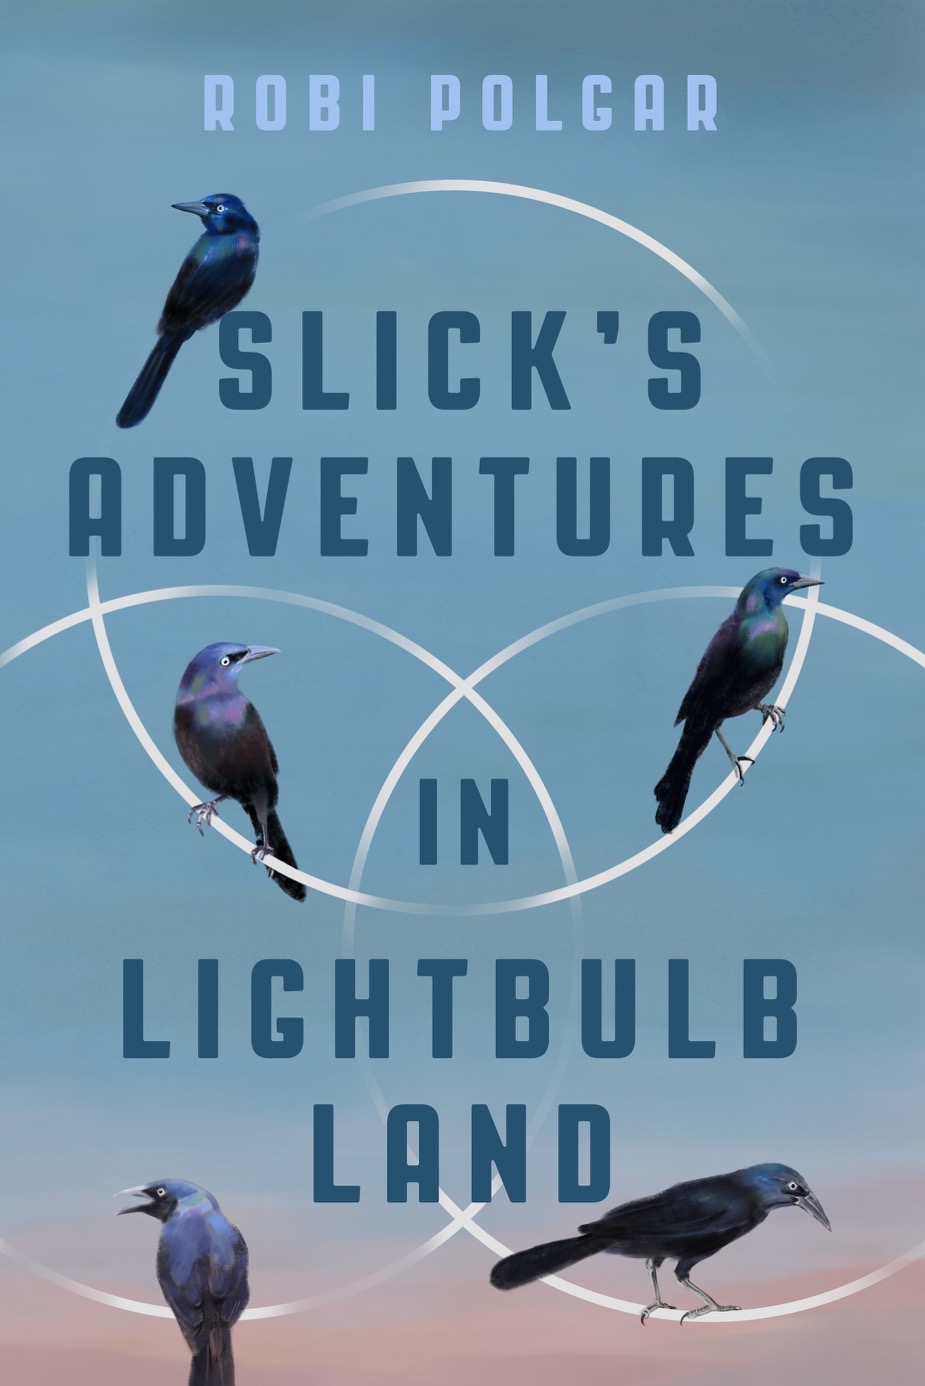 Slick's Adventures in Lightbulb Land, by Robi Polgar